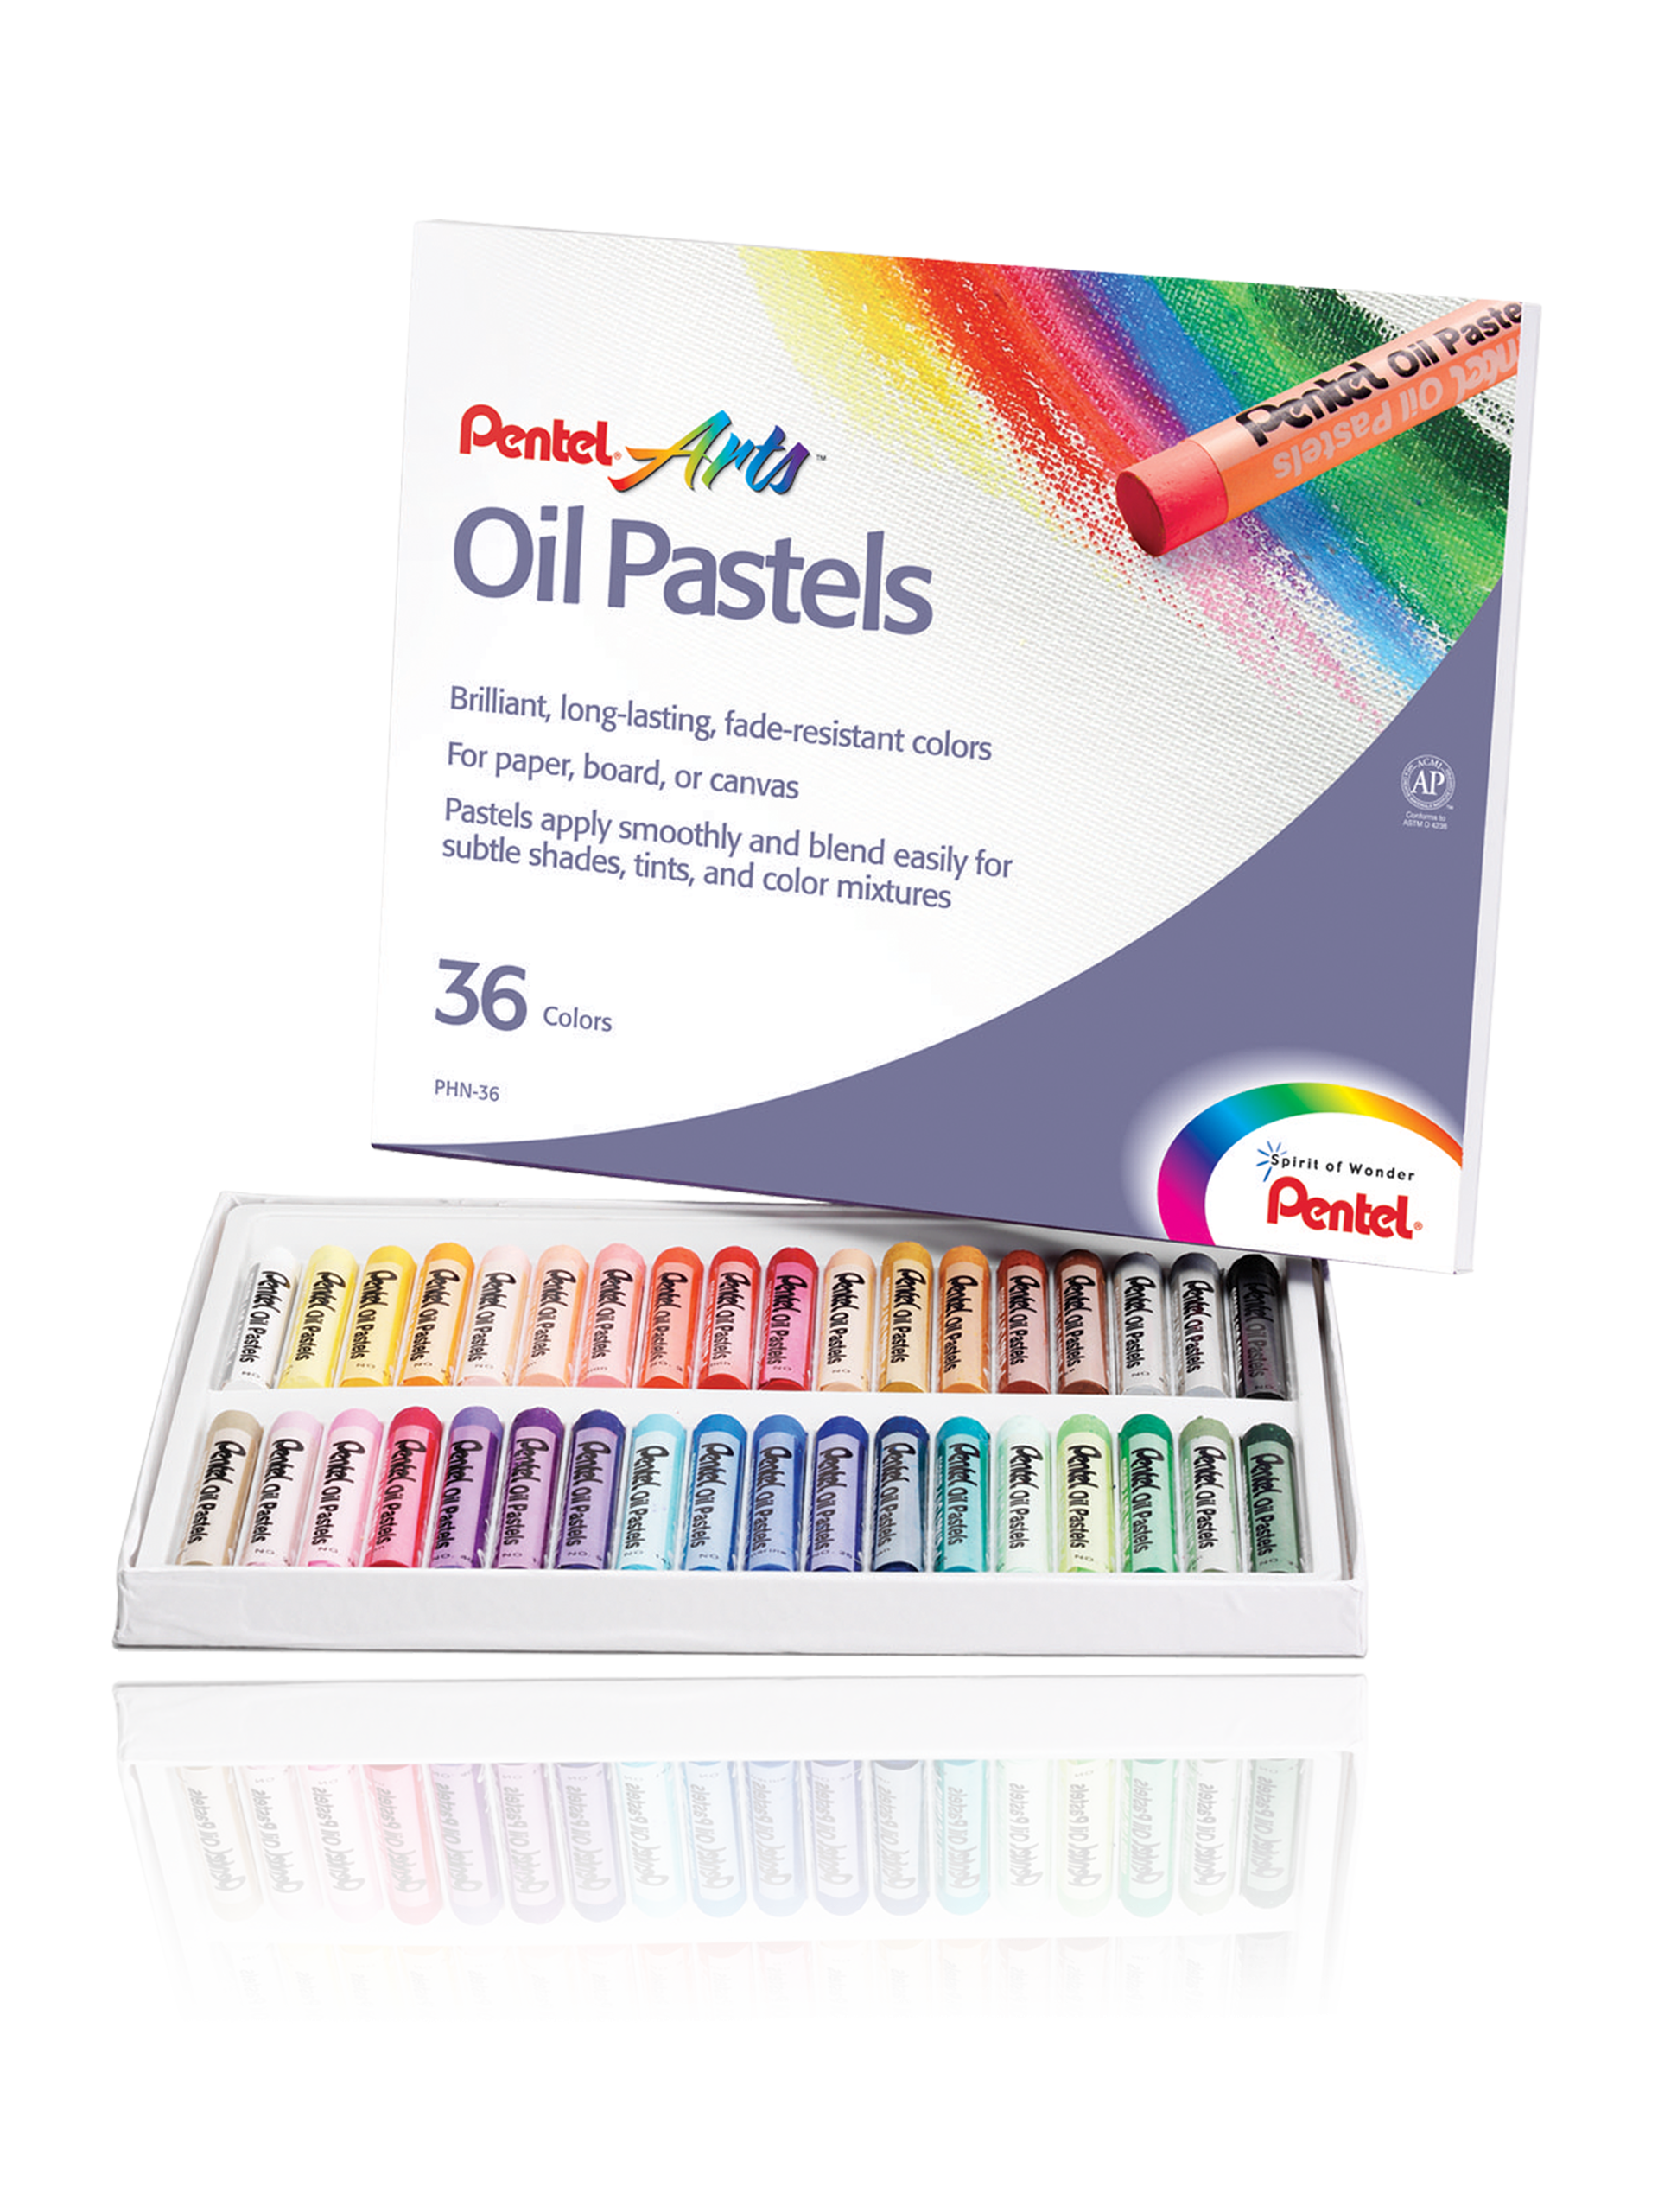 Pentel Oil Pastel Sets - Wyndham Art Supplies